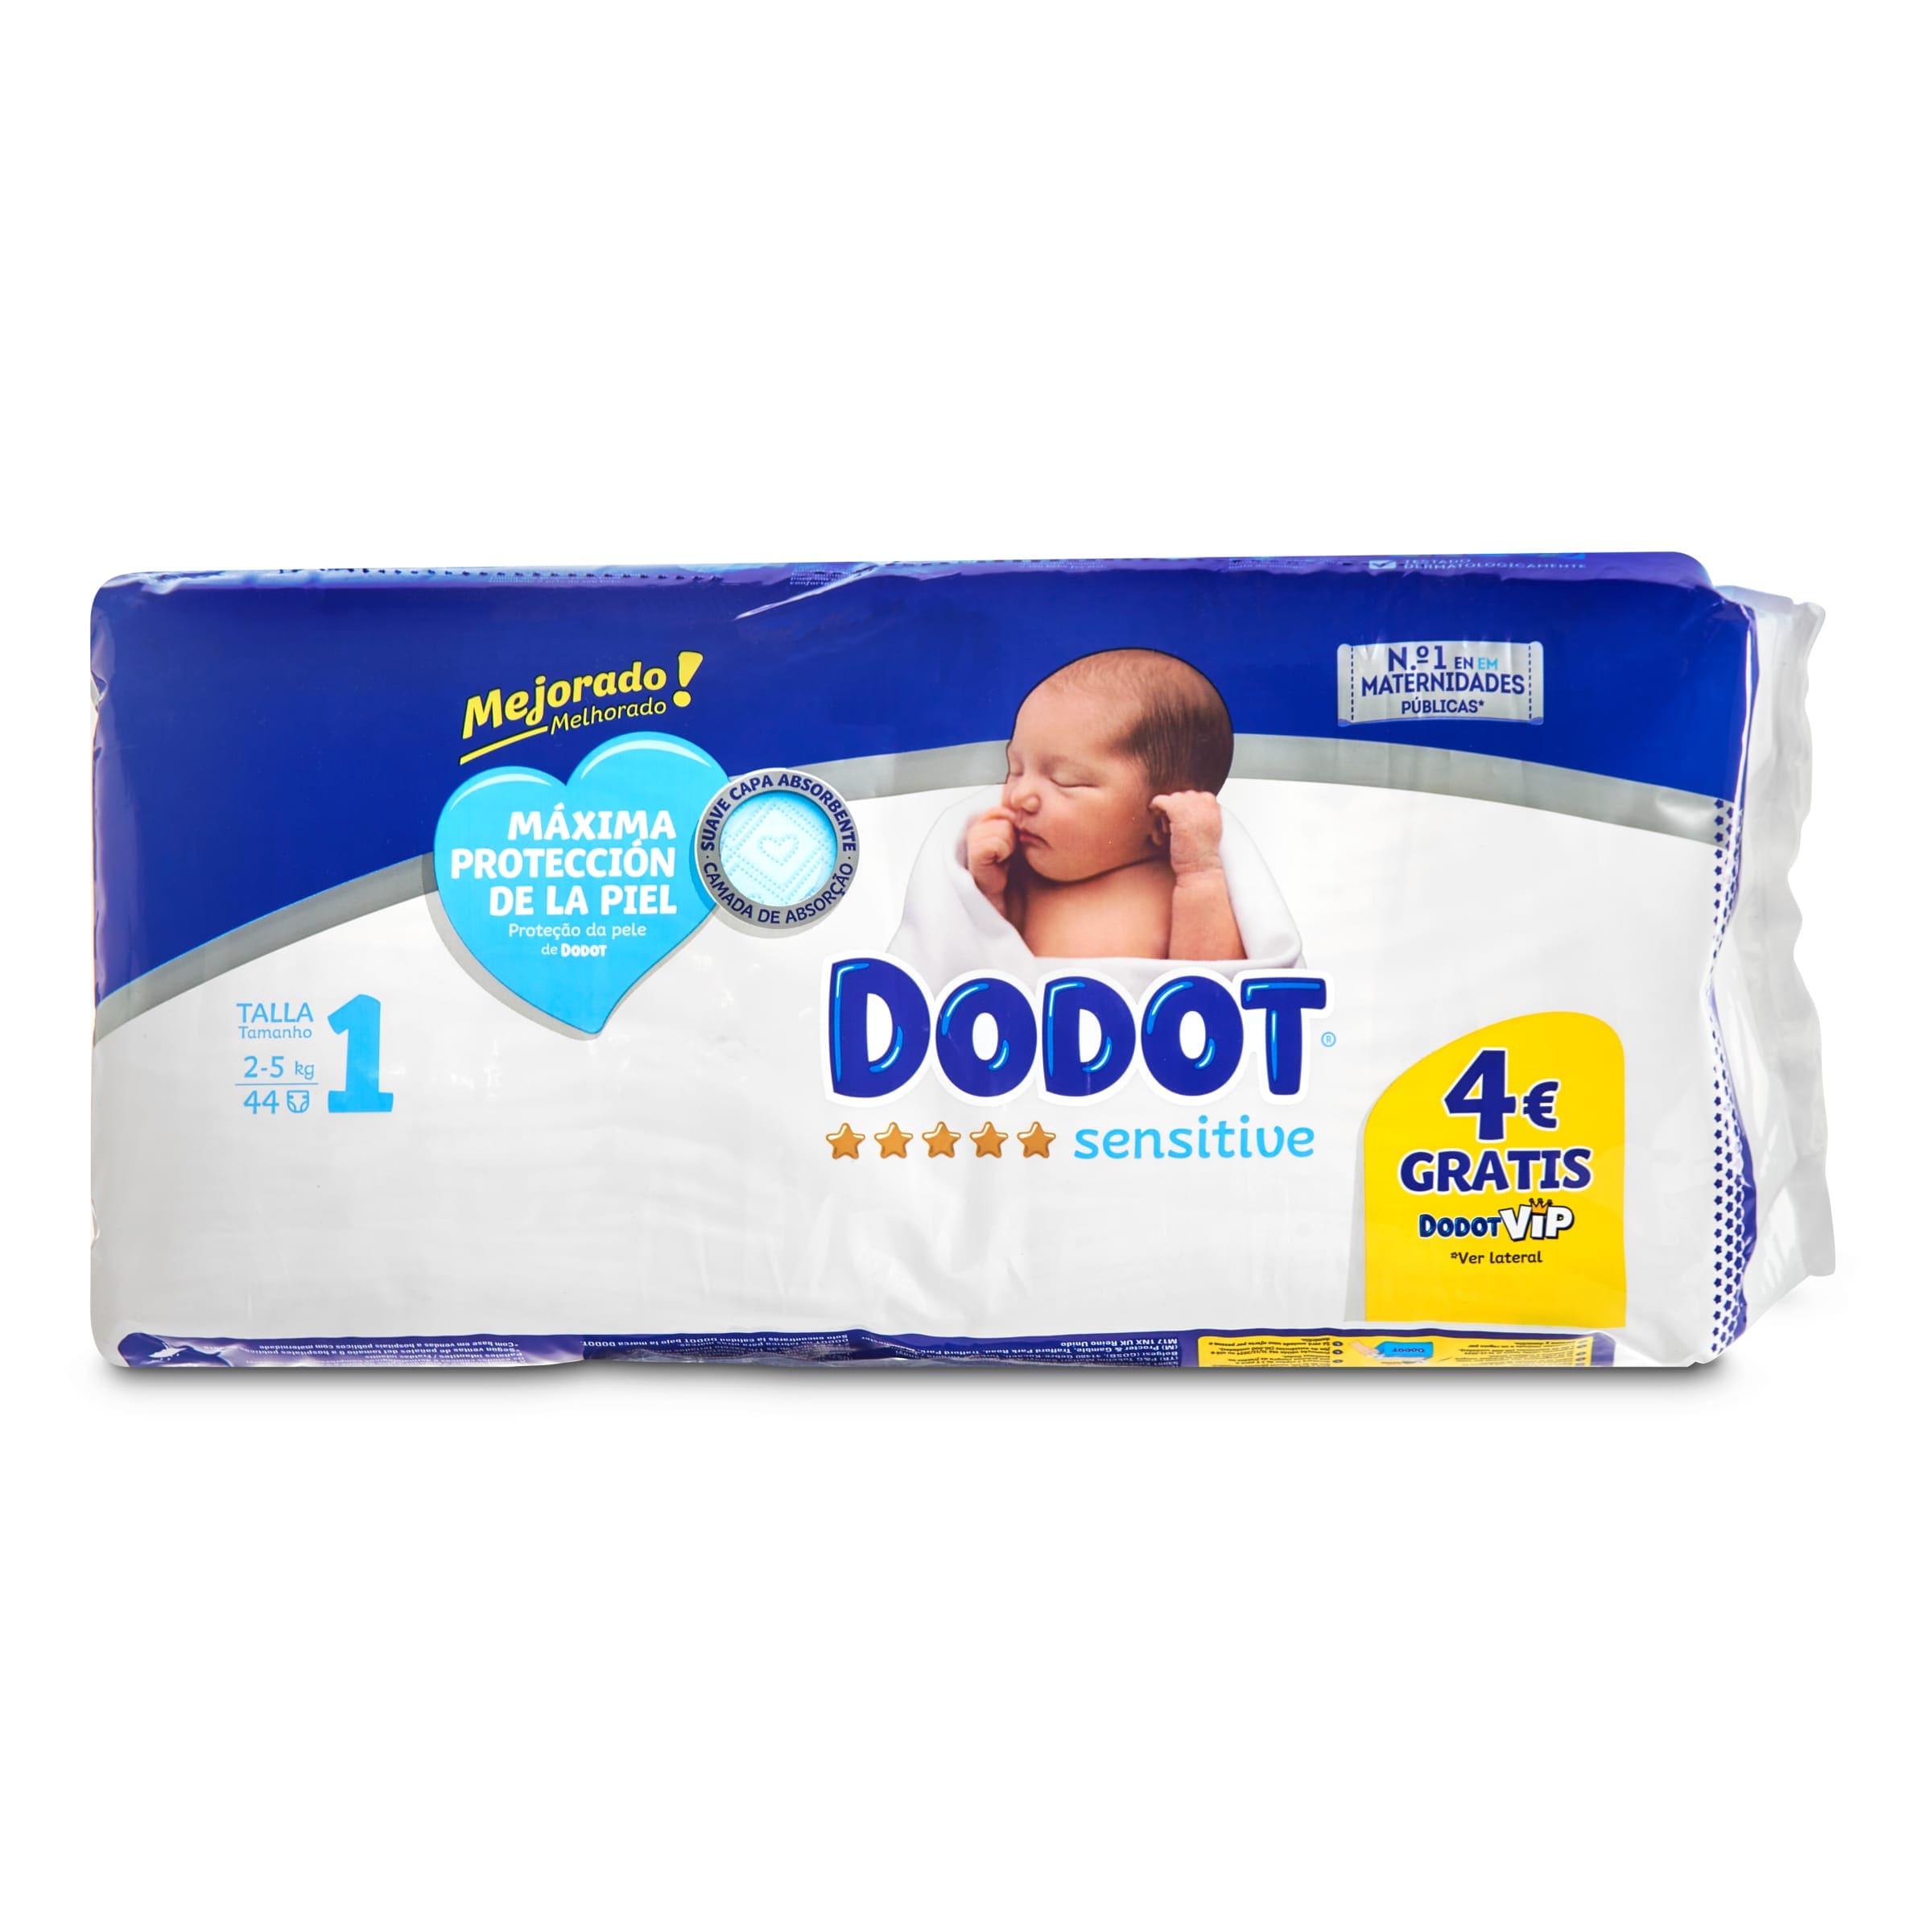 Pañales DODOT Sensitive talla 1 (de 2 a 5 kg) recién nacido caja 112 pañales